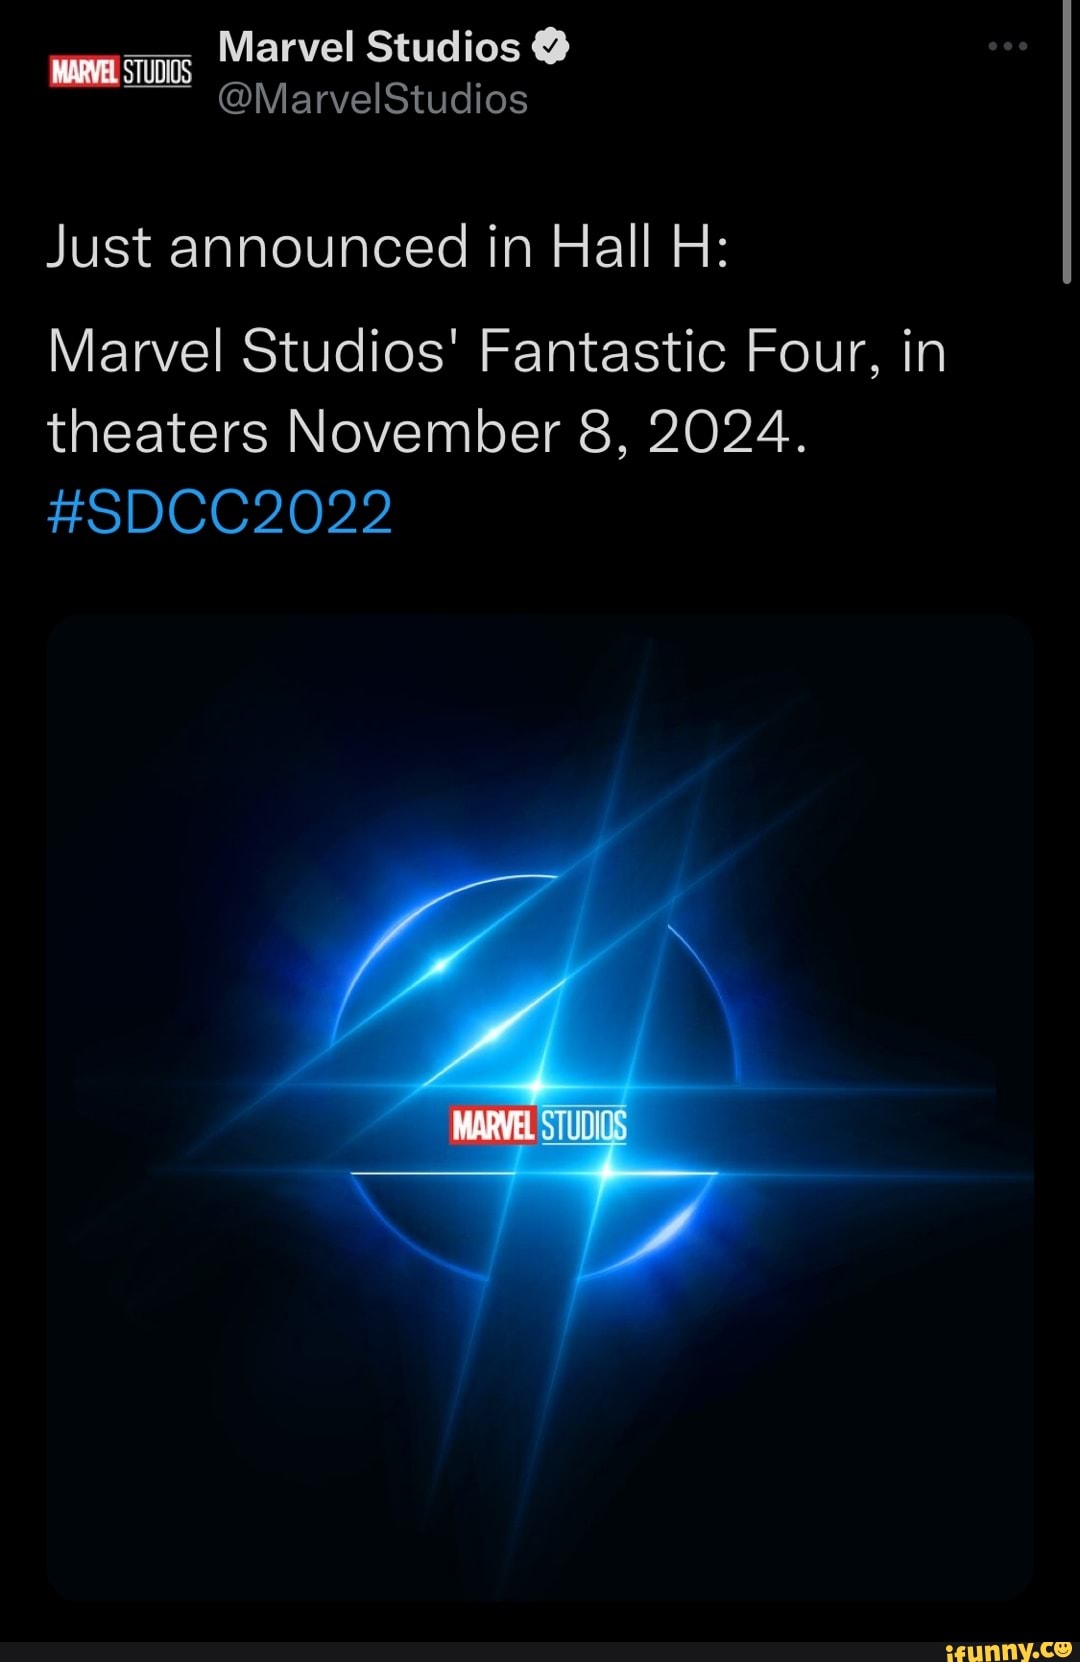 Marvel Studios Just announced in Hall H Marvel Studios' Fantastic Four